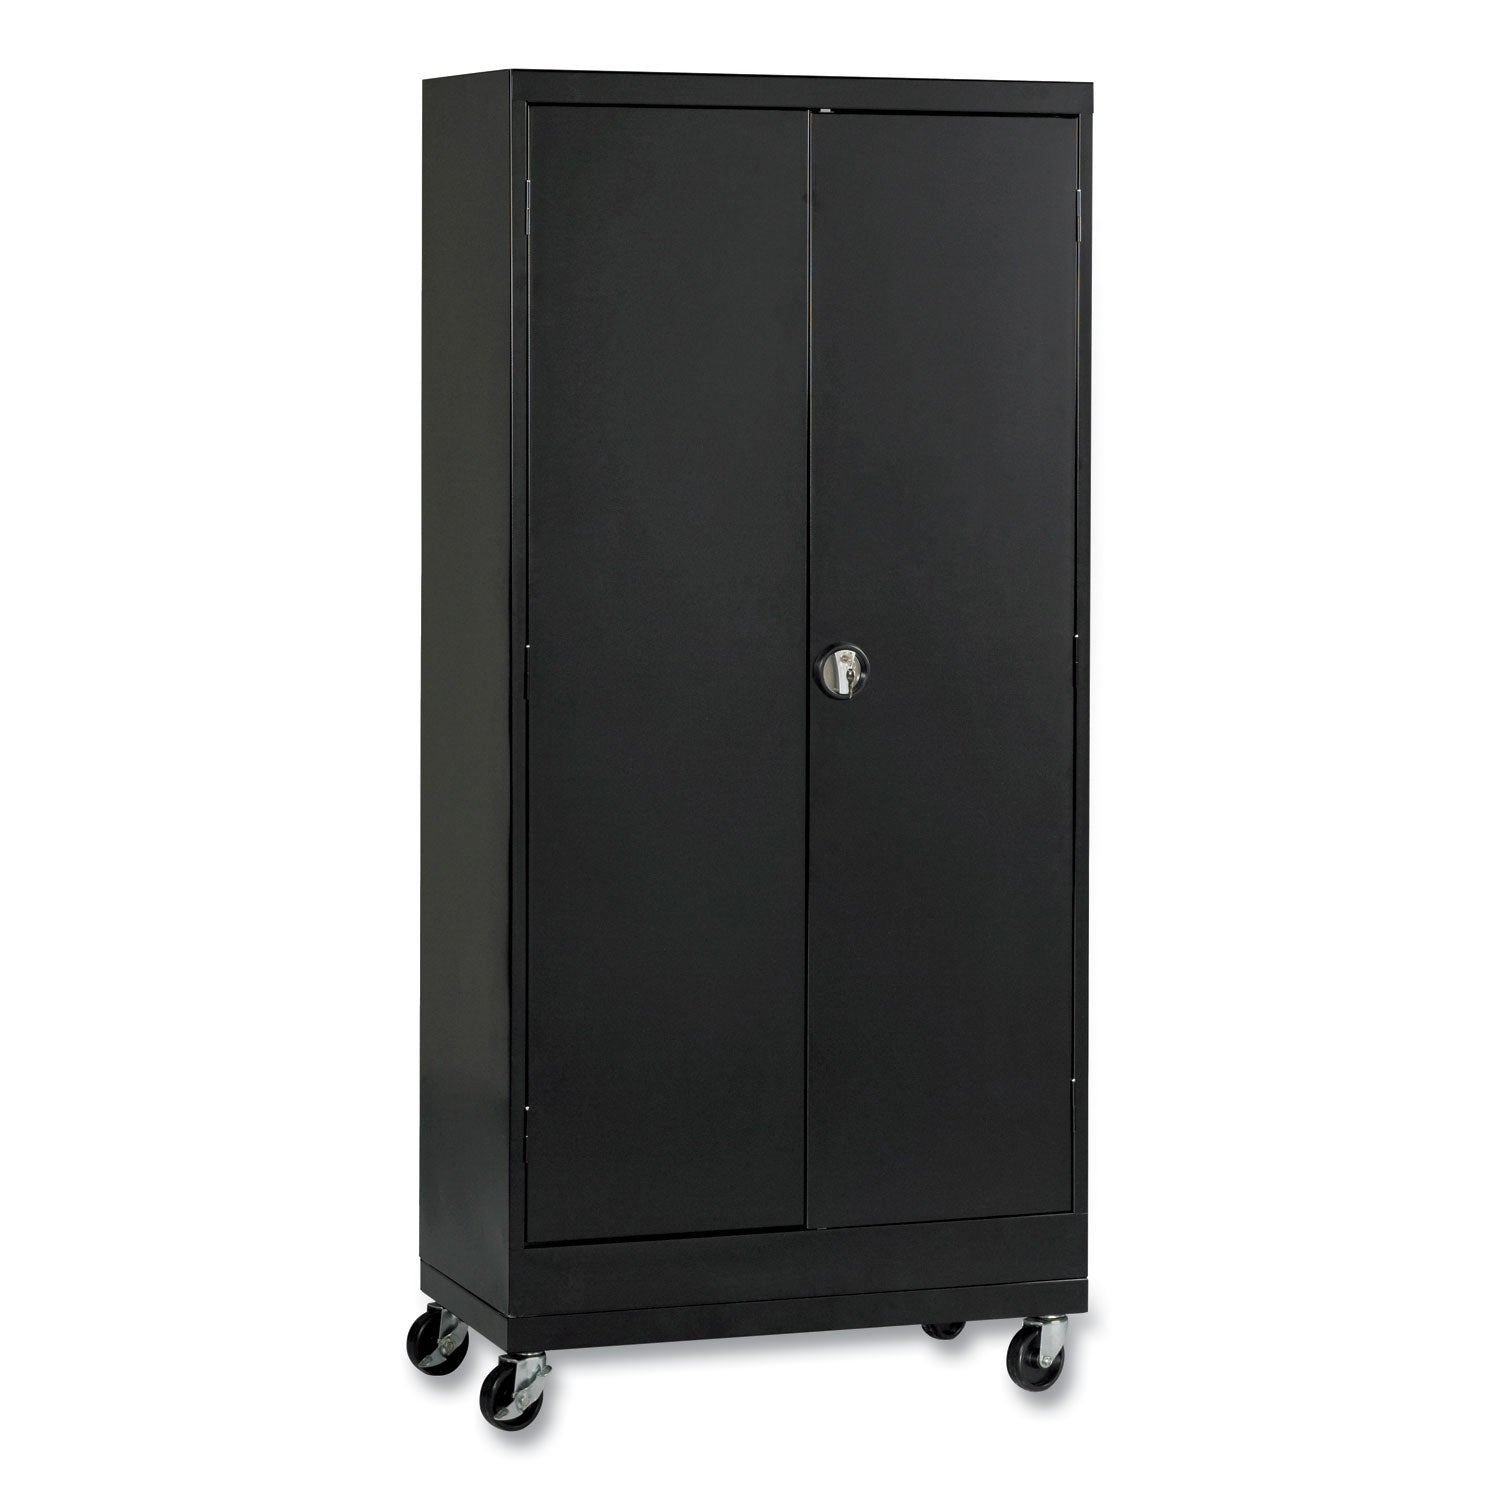 assembled-mobile-storage-cabinet-with-adjustable-shelves-36w-x-24d-x-66h-black_alecm6624bk - 1